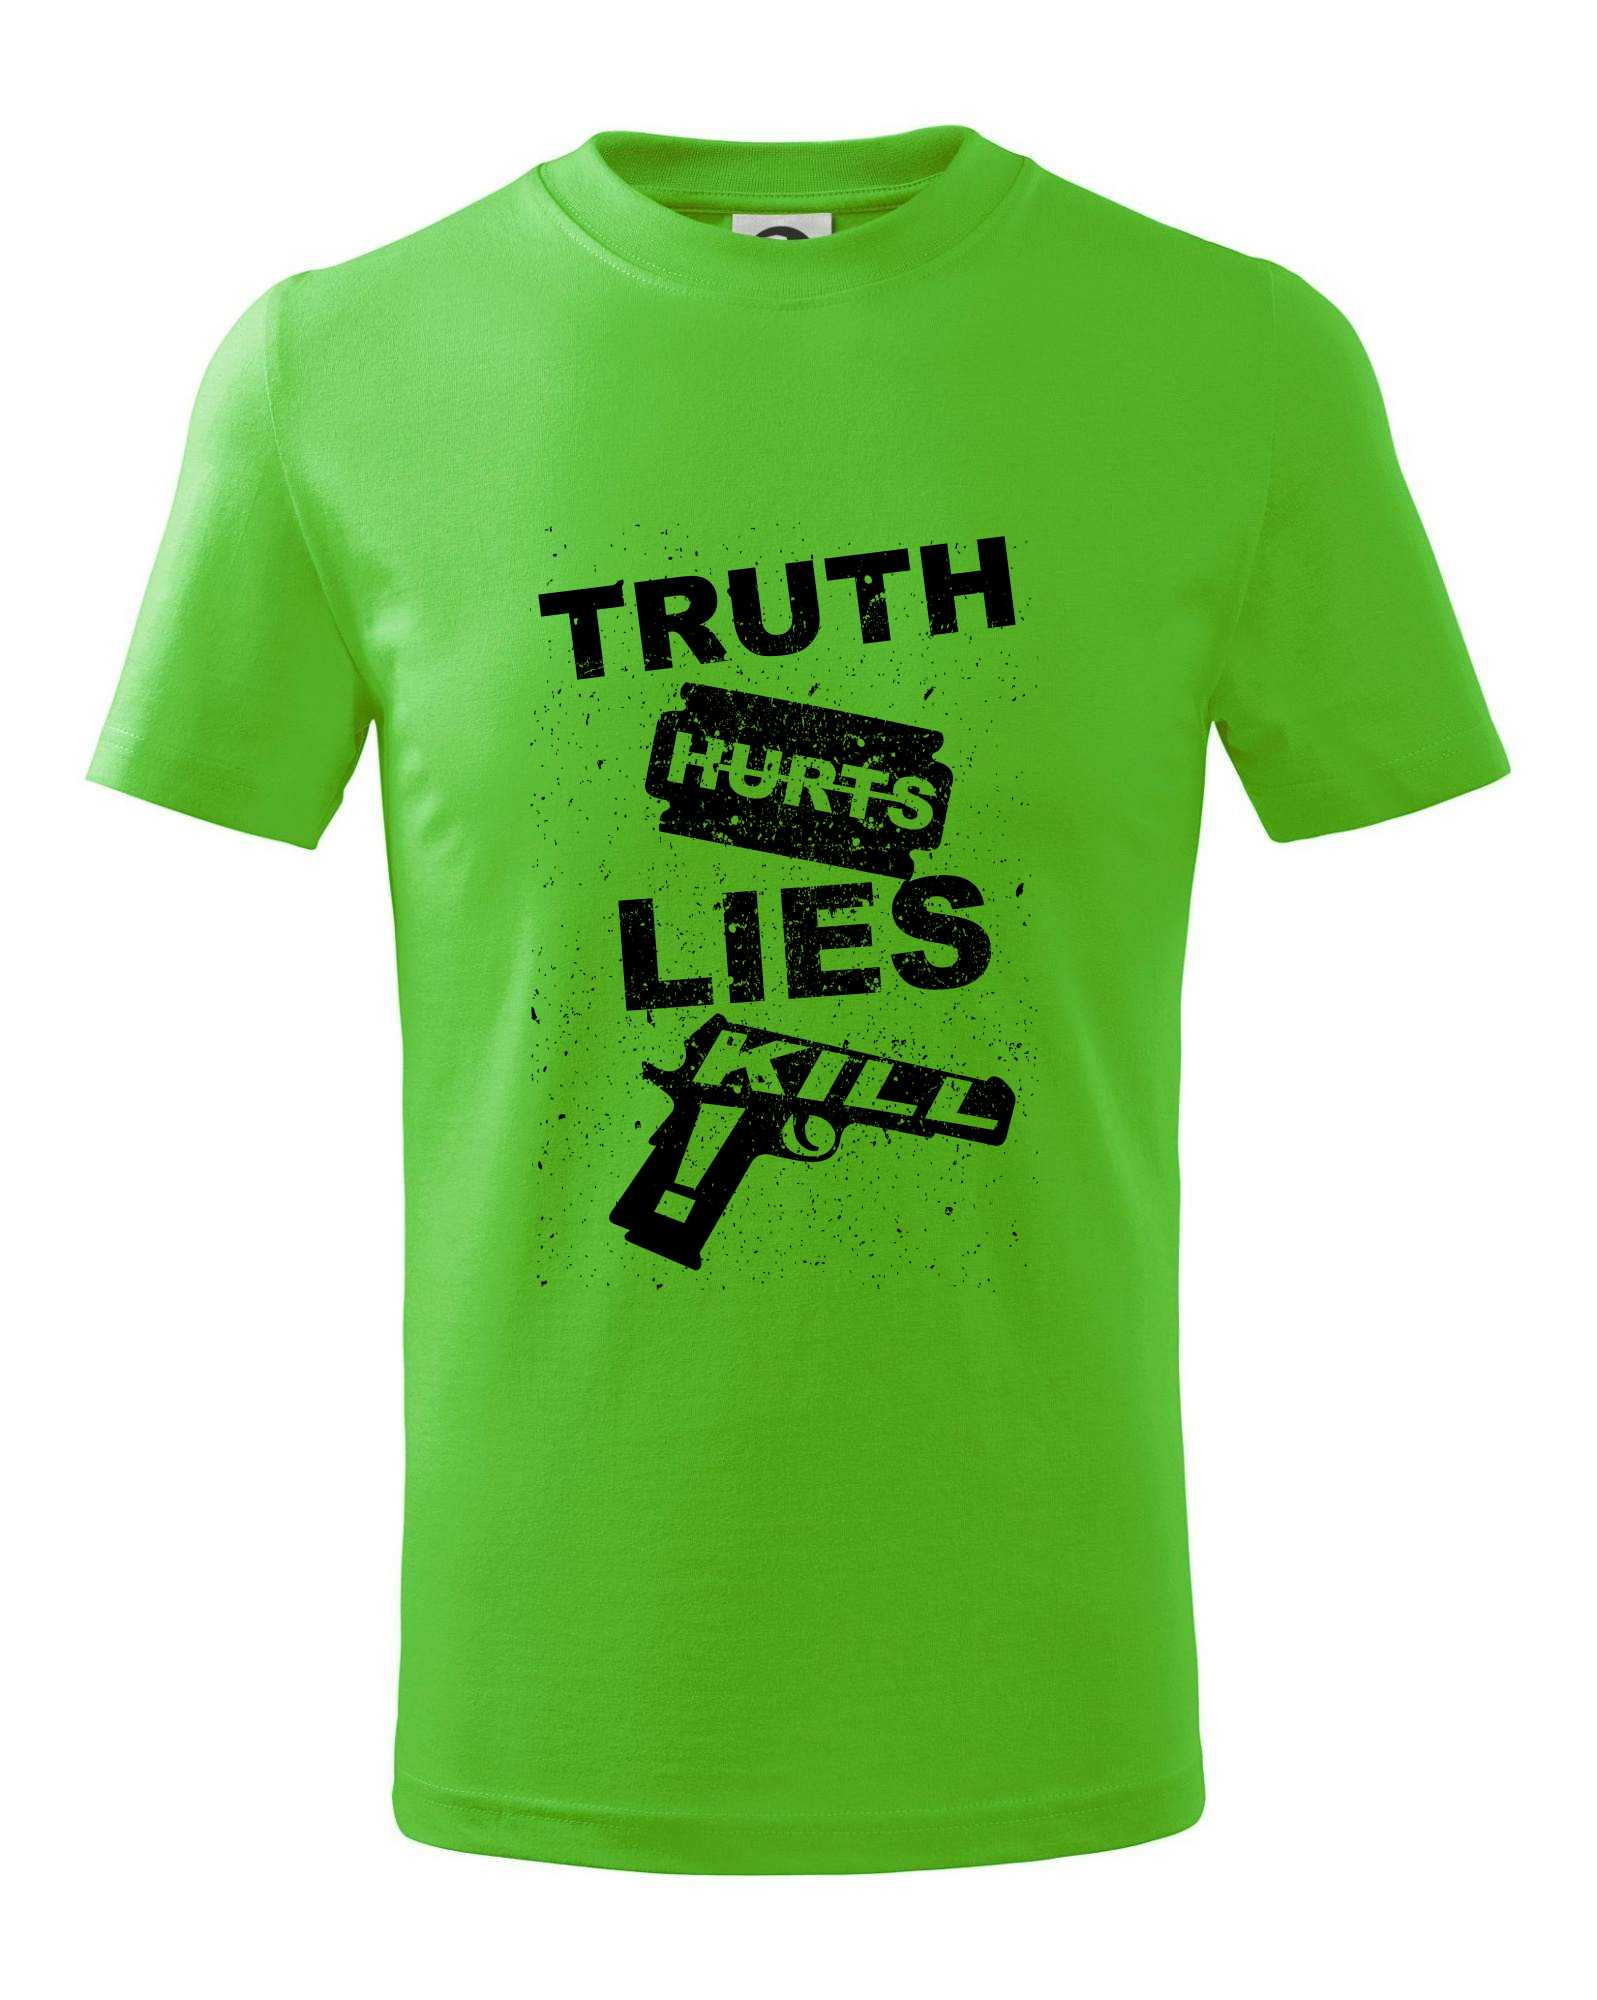 Truth Hurts lies kils - Triko dětské basic